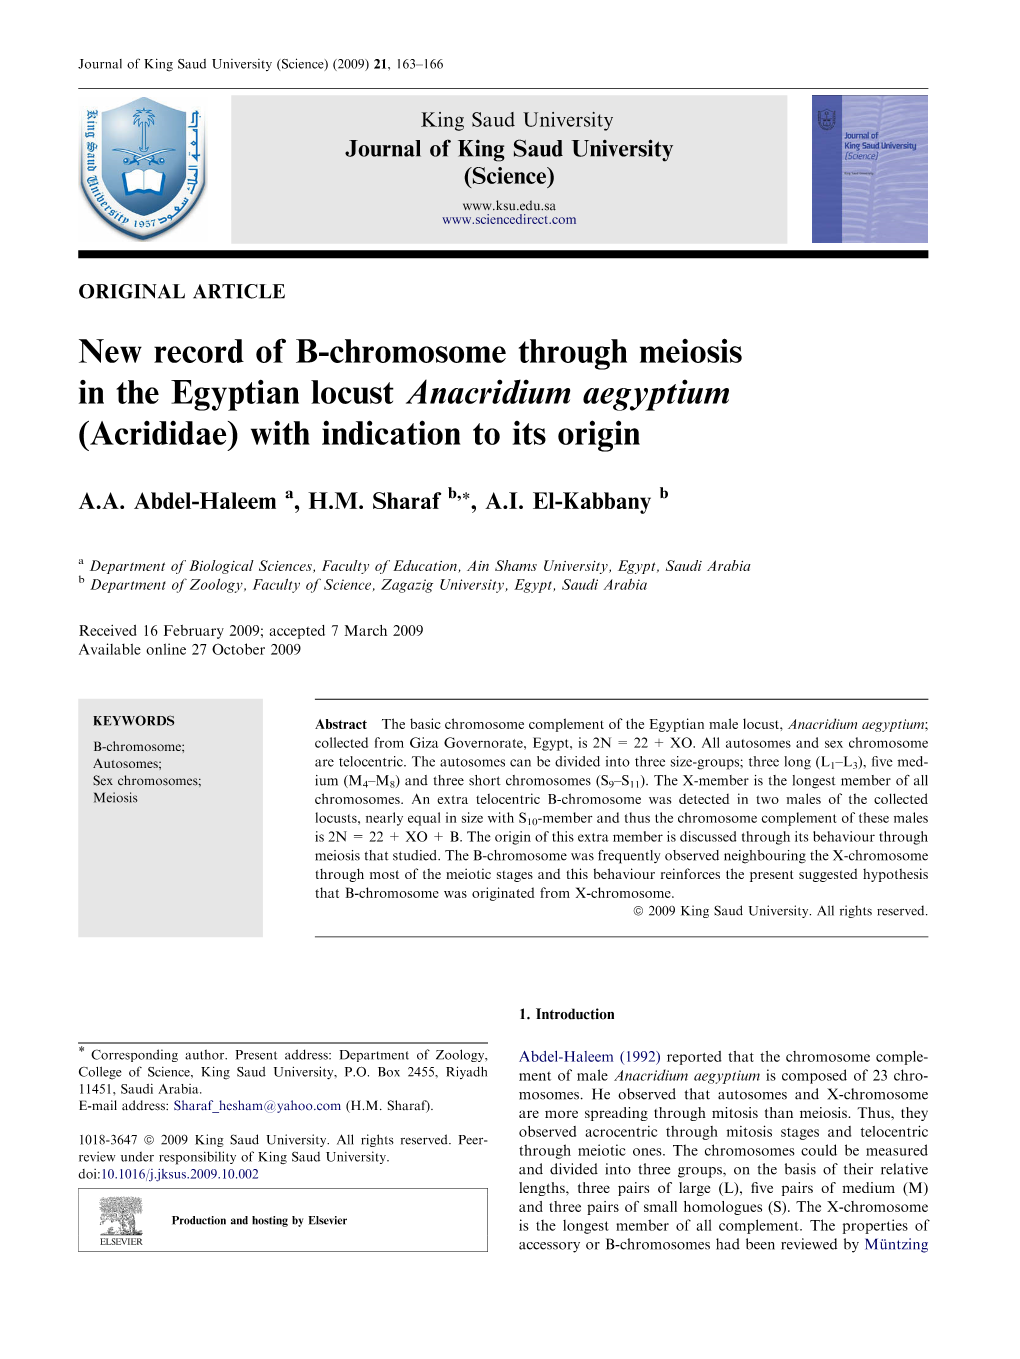 New Record of B-Chromosome Through Meiosis in the Egyptian Locust Anacridium Aegyptium (Acrididae) with Indication to Its Origin